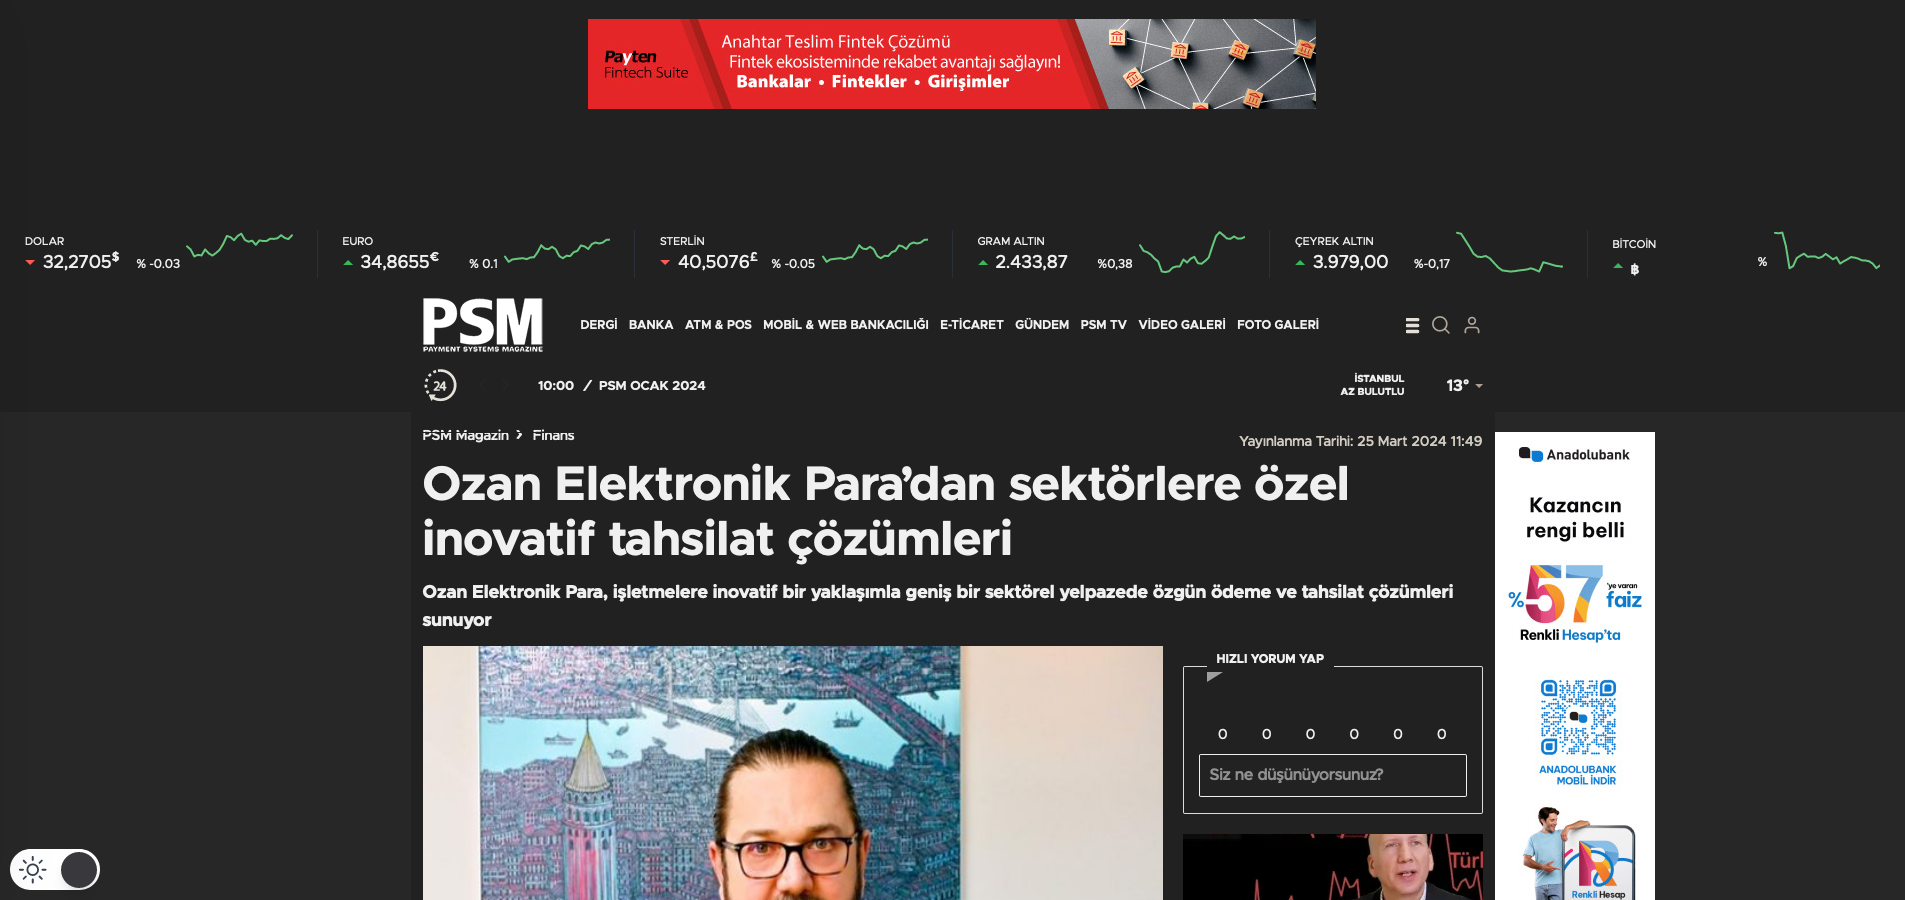 Psm Magazin - Ömer Suner, Ozan Elektronik Para